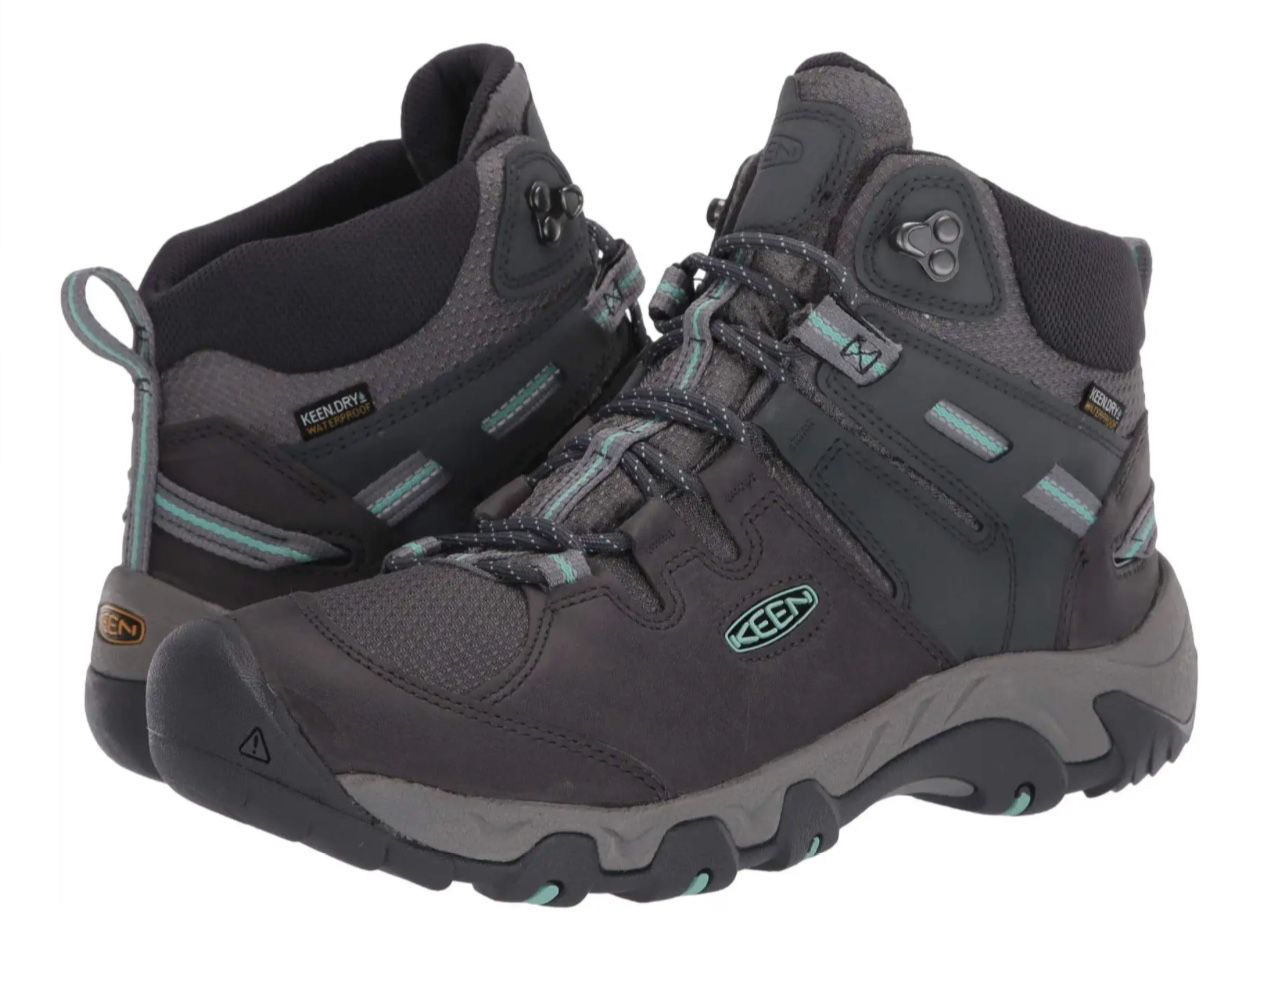 KEEN SIZE 9 Women's Steens Mid Height Leather Waterproof Hiking Boot Steel Grey Shoes Sneakers